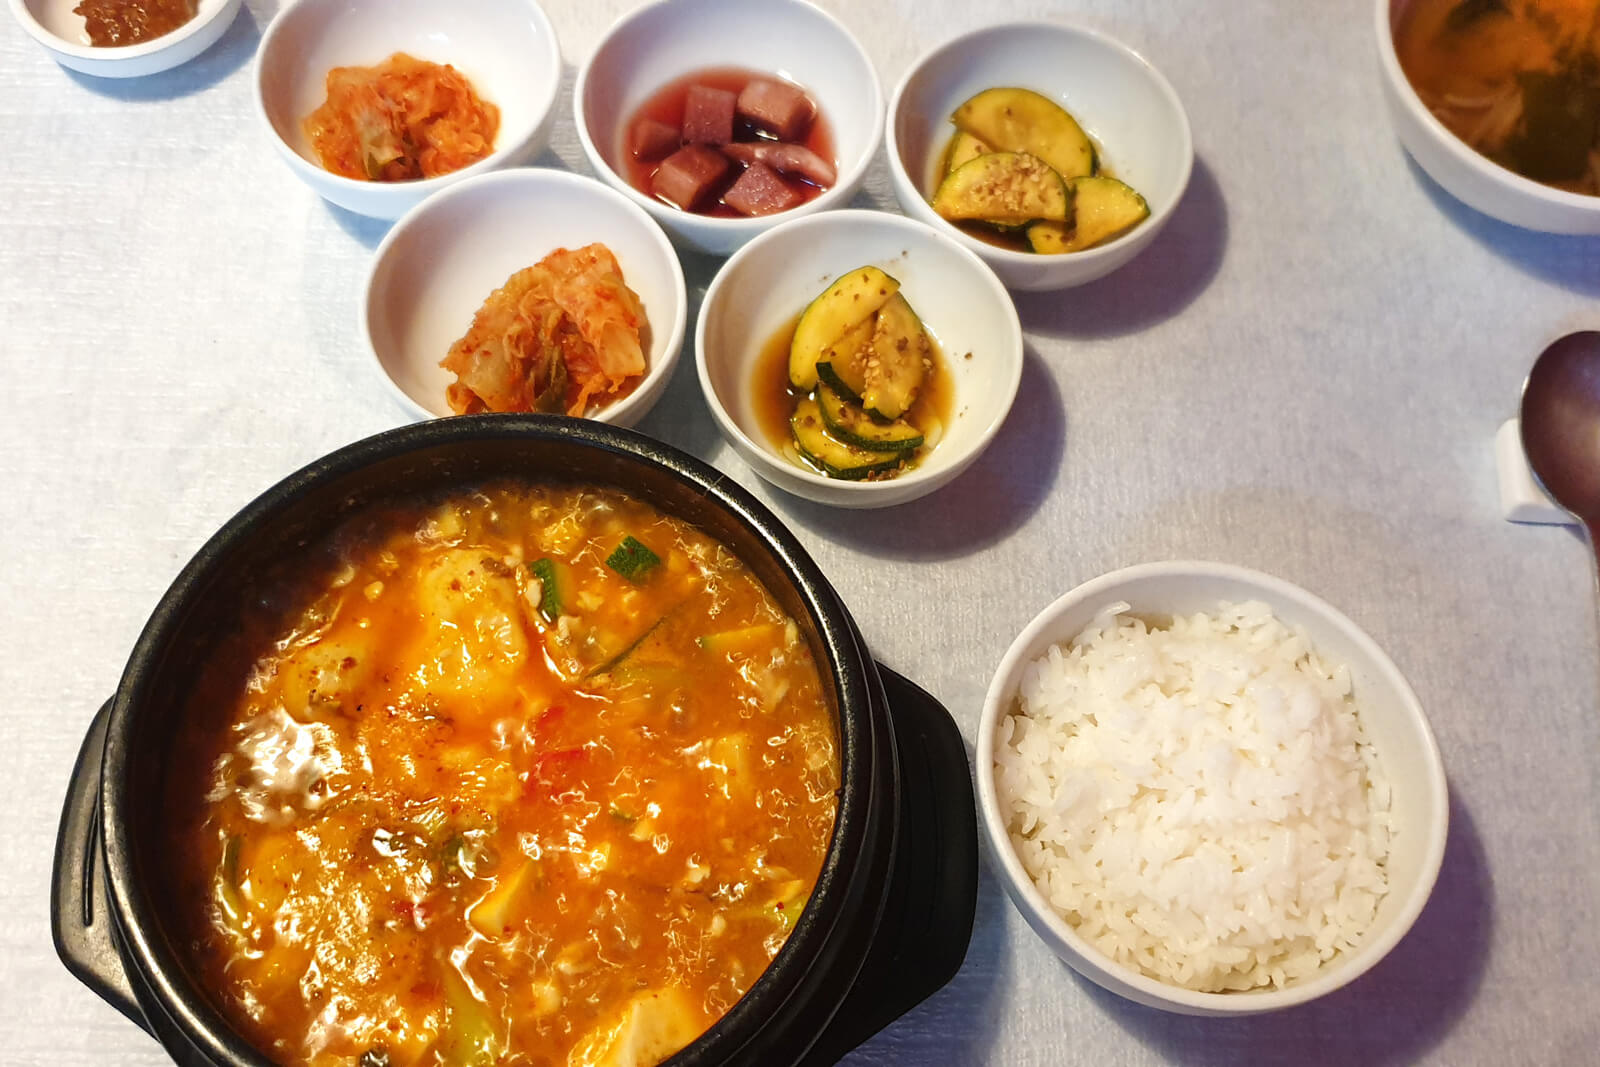 A Korean dish at the Akaraka Korean Restaurant in Zurich